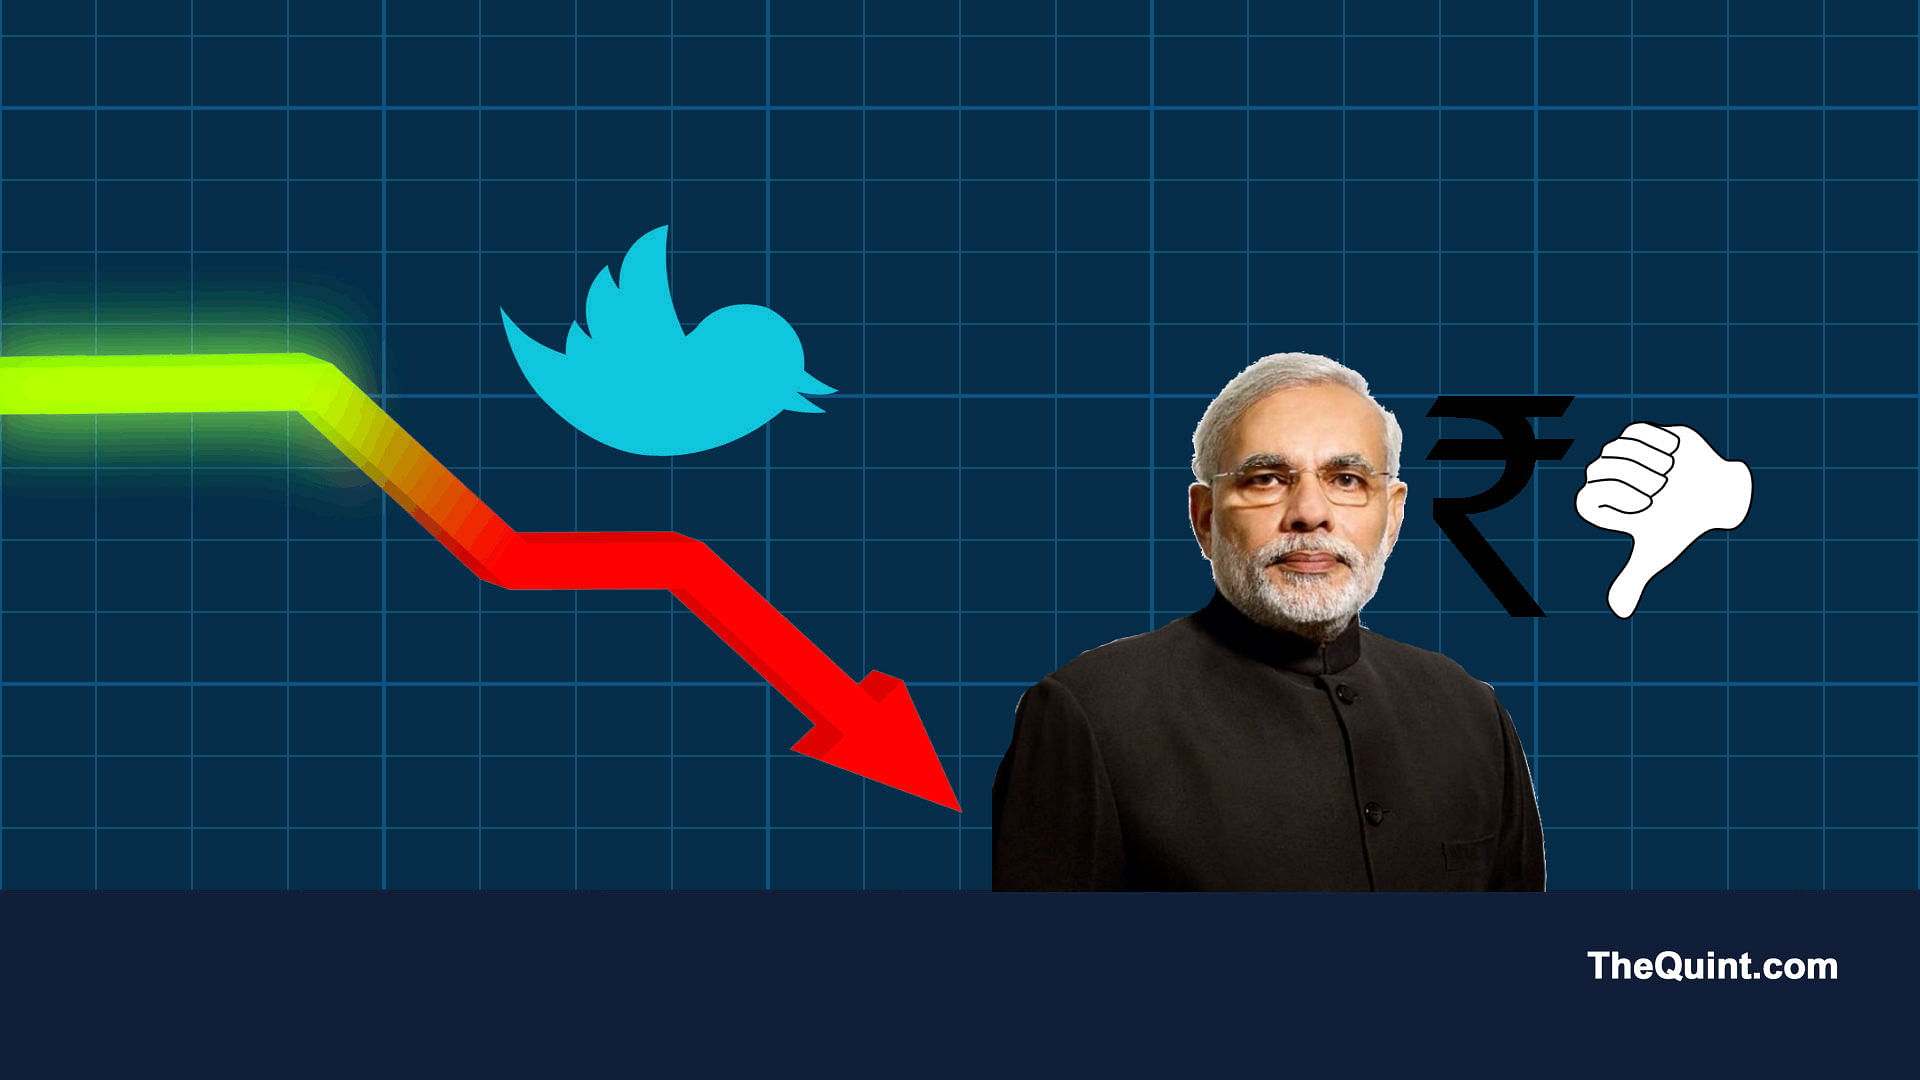 PM Modi’s social following takes a toll. (Photo: <b>The Quint</b>)